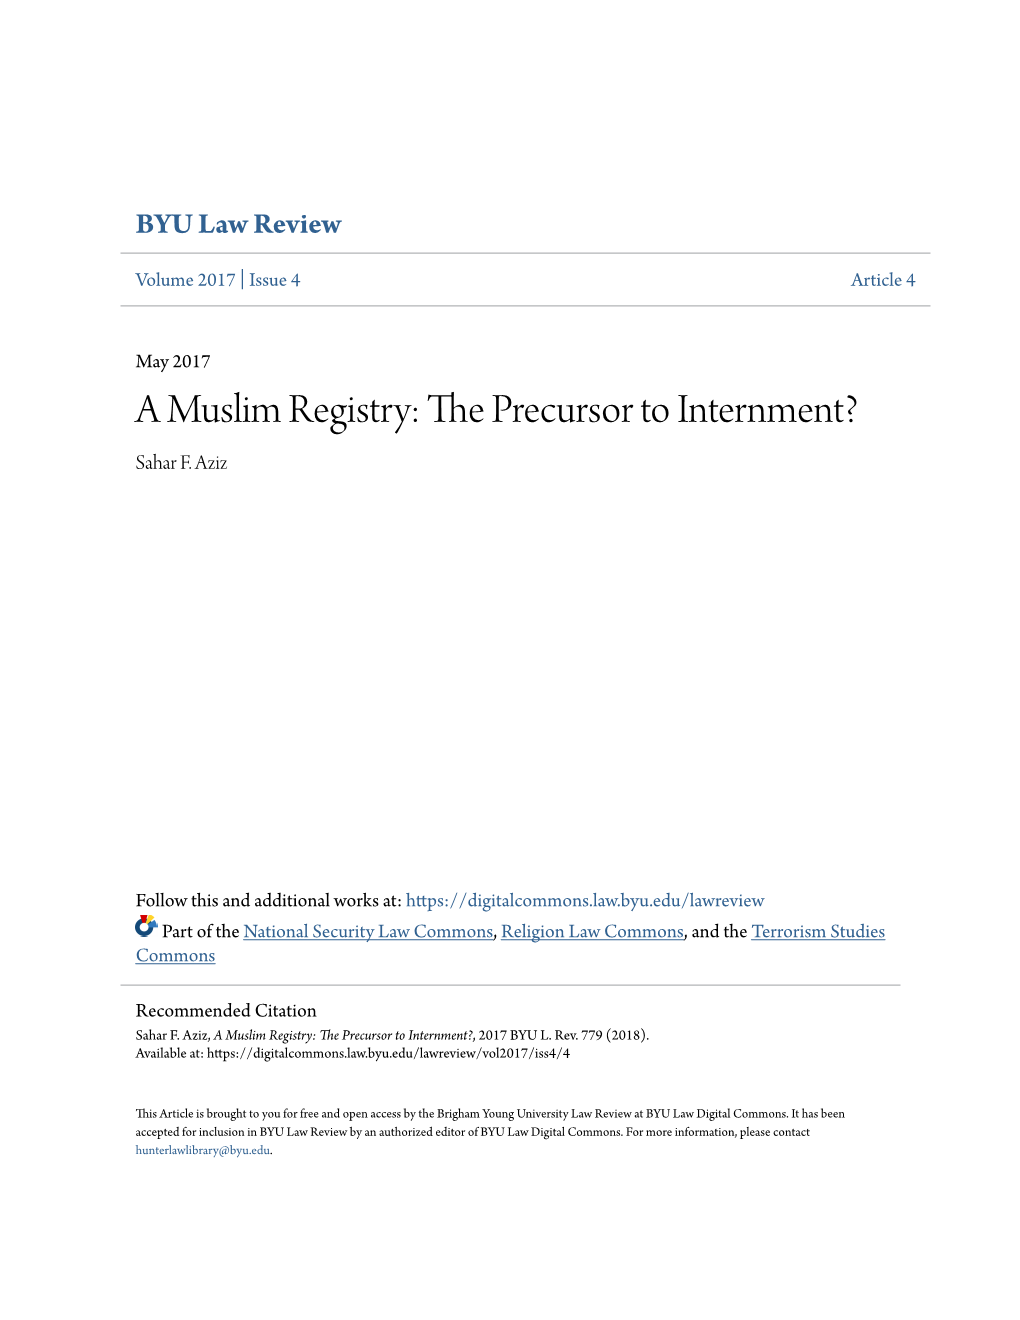 A Muslim Registry: the Precursor to Internment?, 2017 BYU L